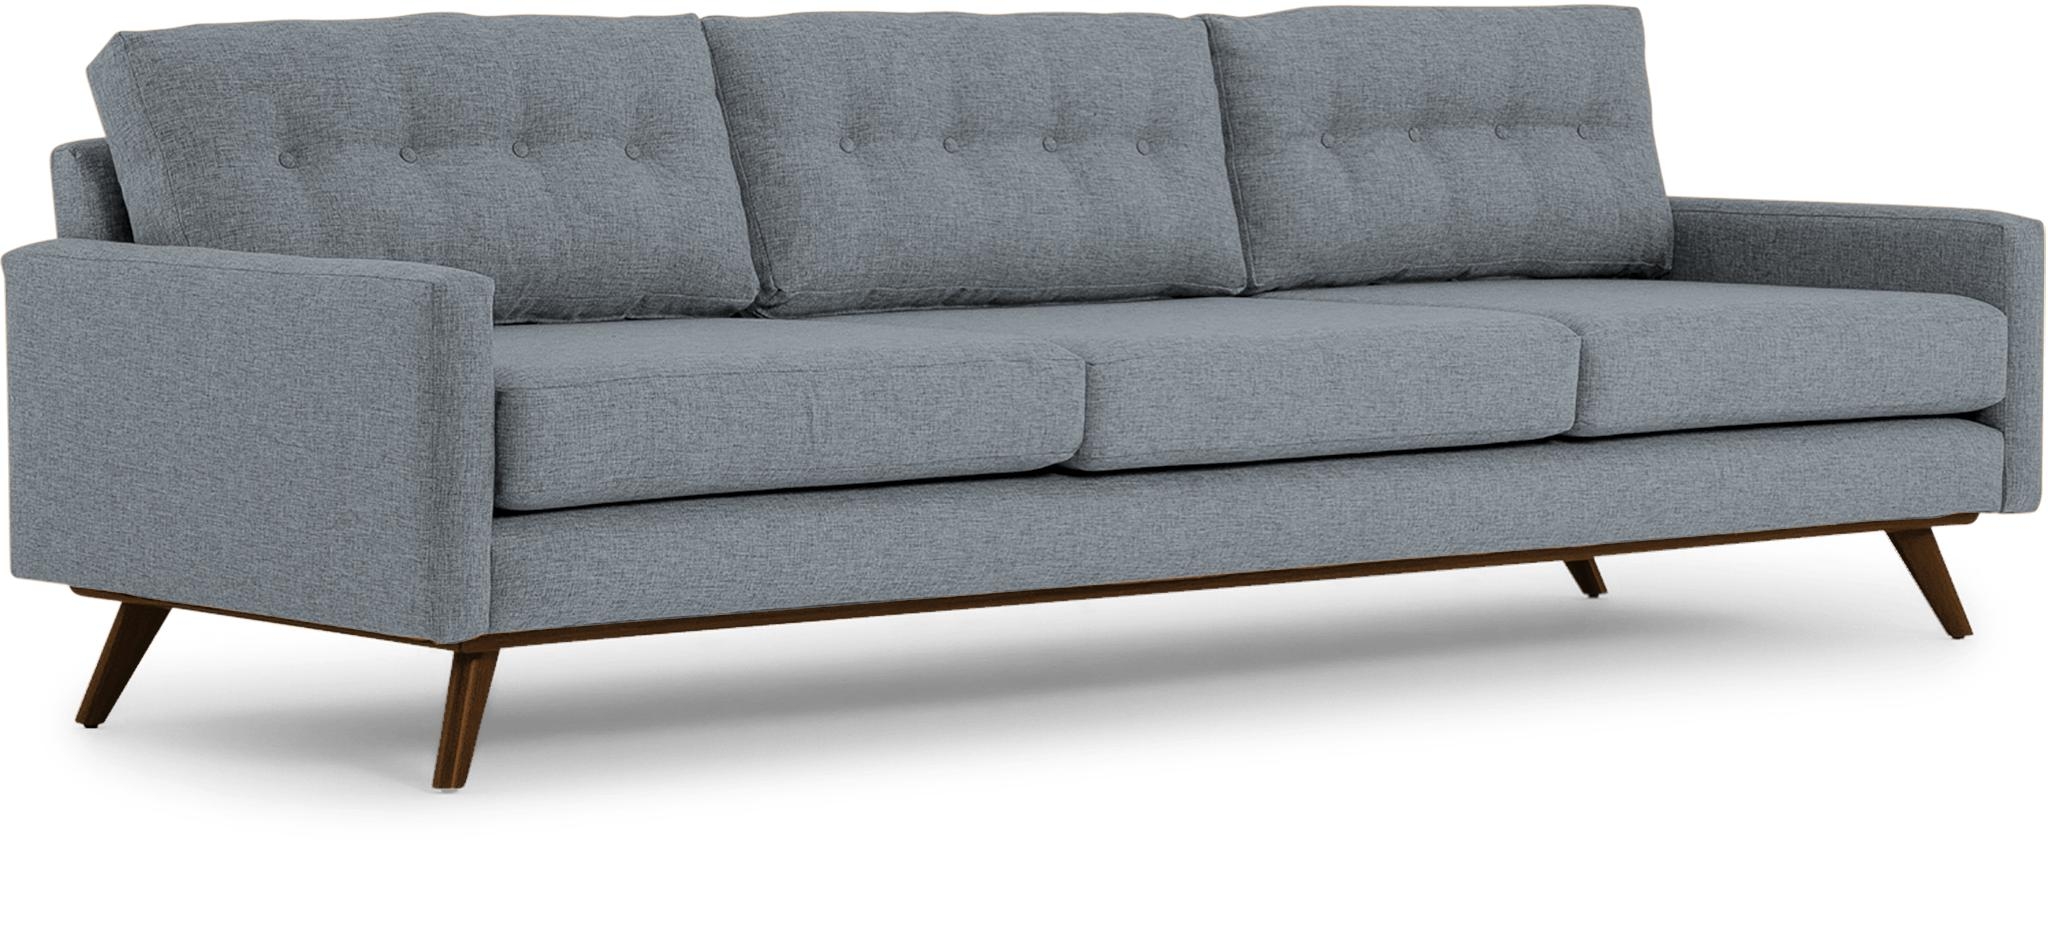 Gray Hopson Mid Century Modern Grand Sofa - Synergy Pewter - Mocha - Image 1